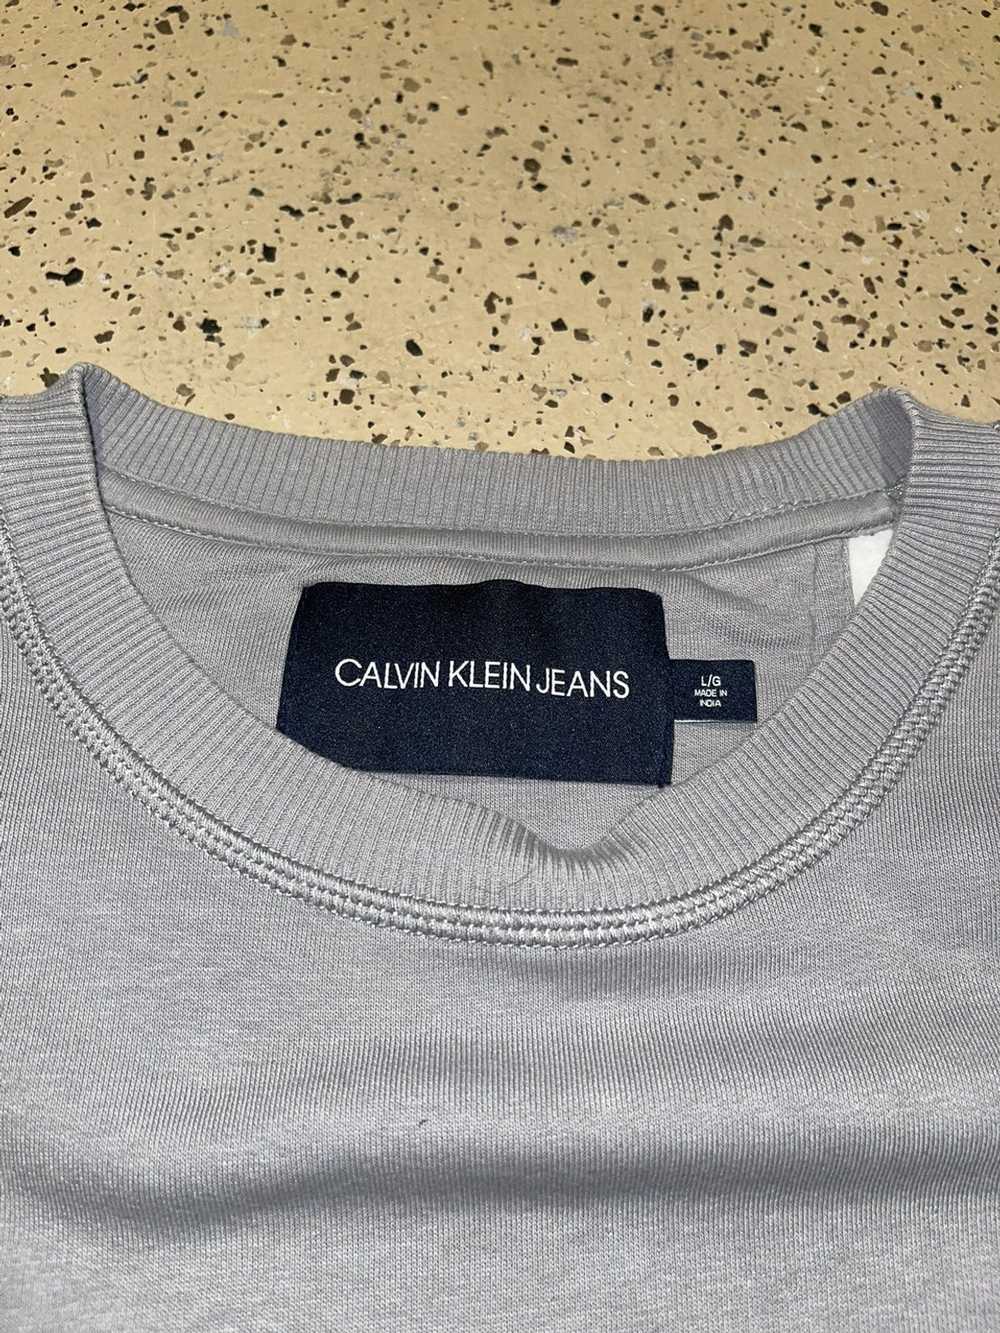 Calvin Klein Grey and White Calvin Klein Sweatshi… - image 2